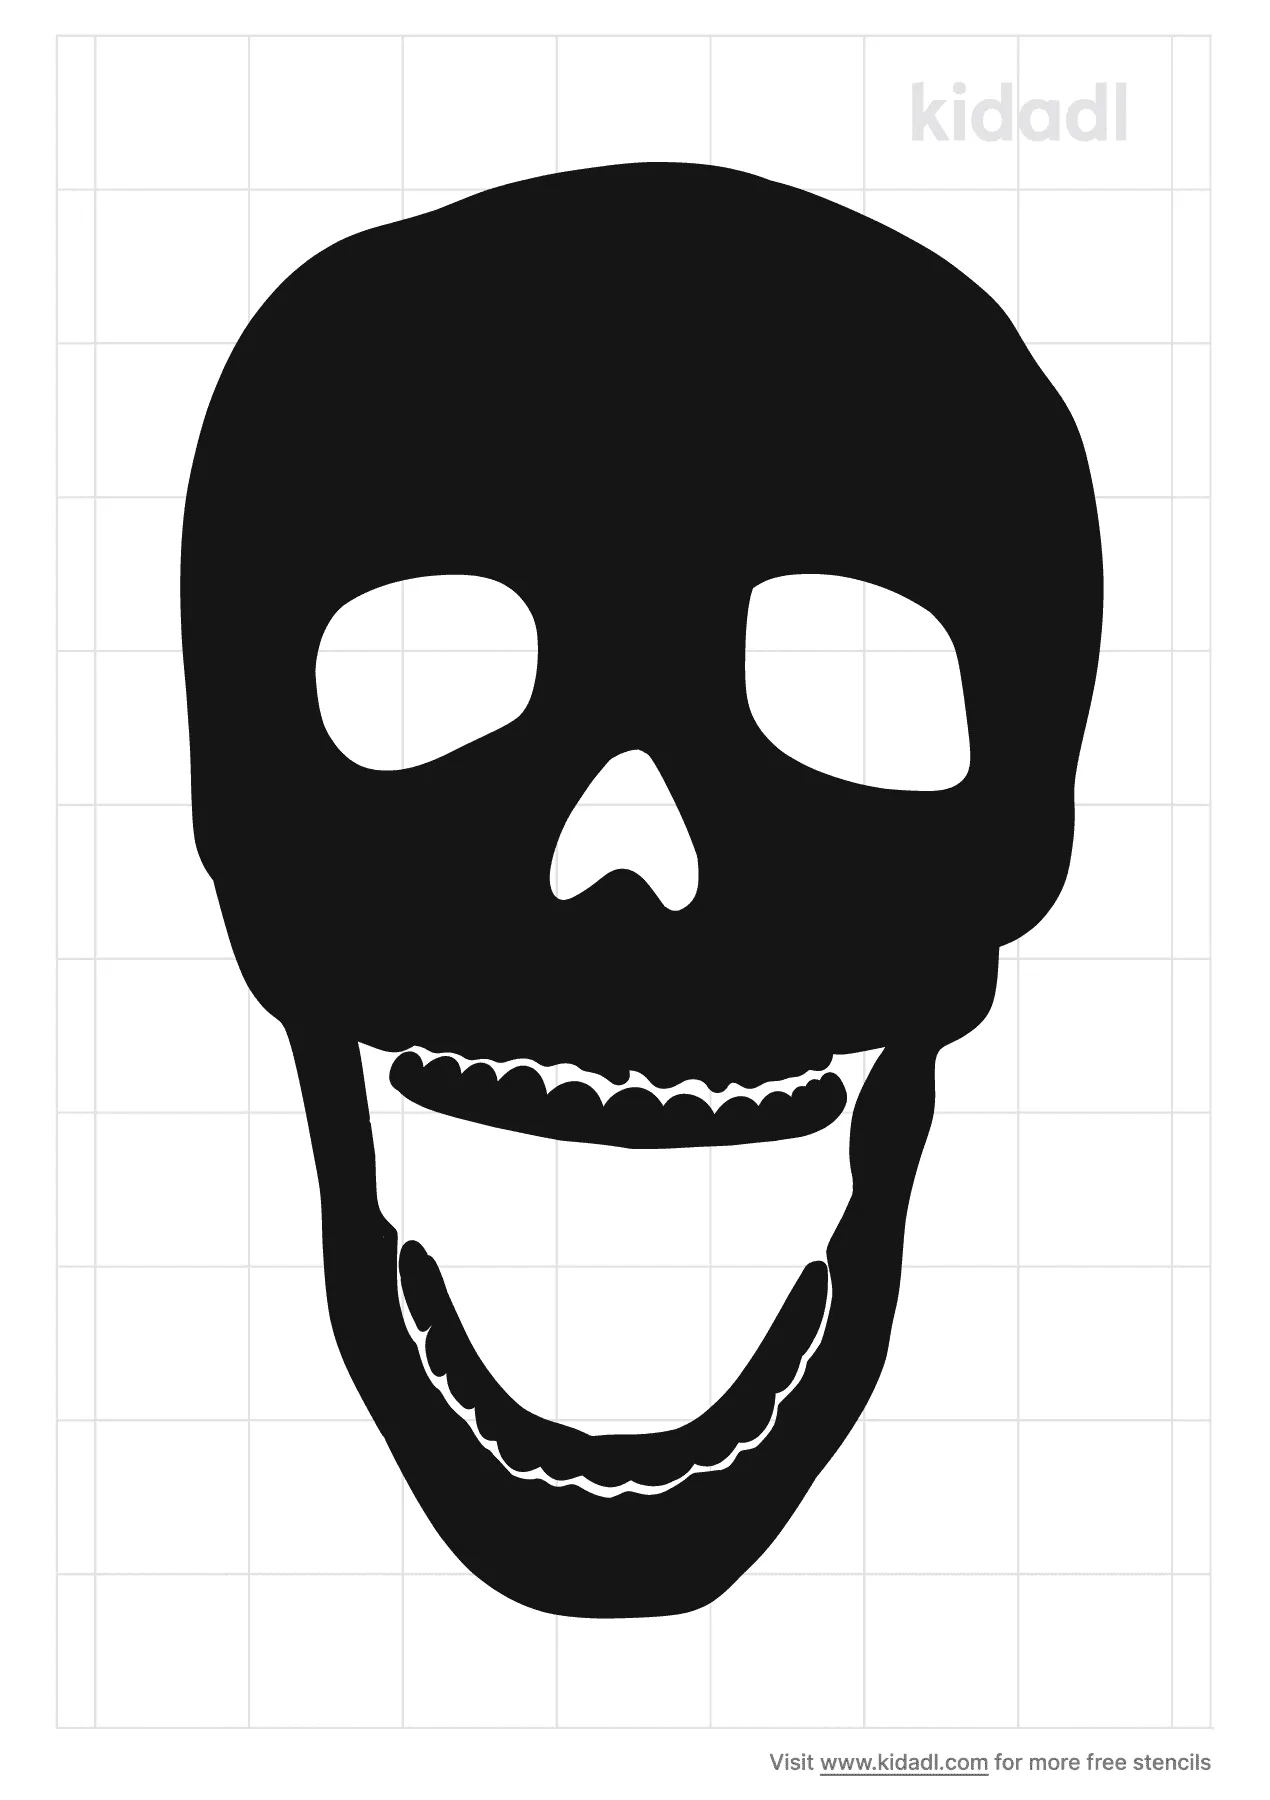 laughing skull stencils free printable halloween stencils kidadl and halloween stencils free printable stencils kidadl